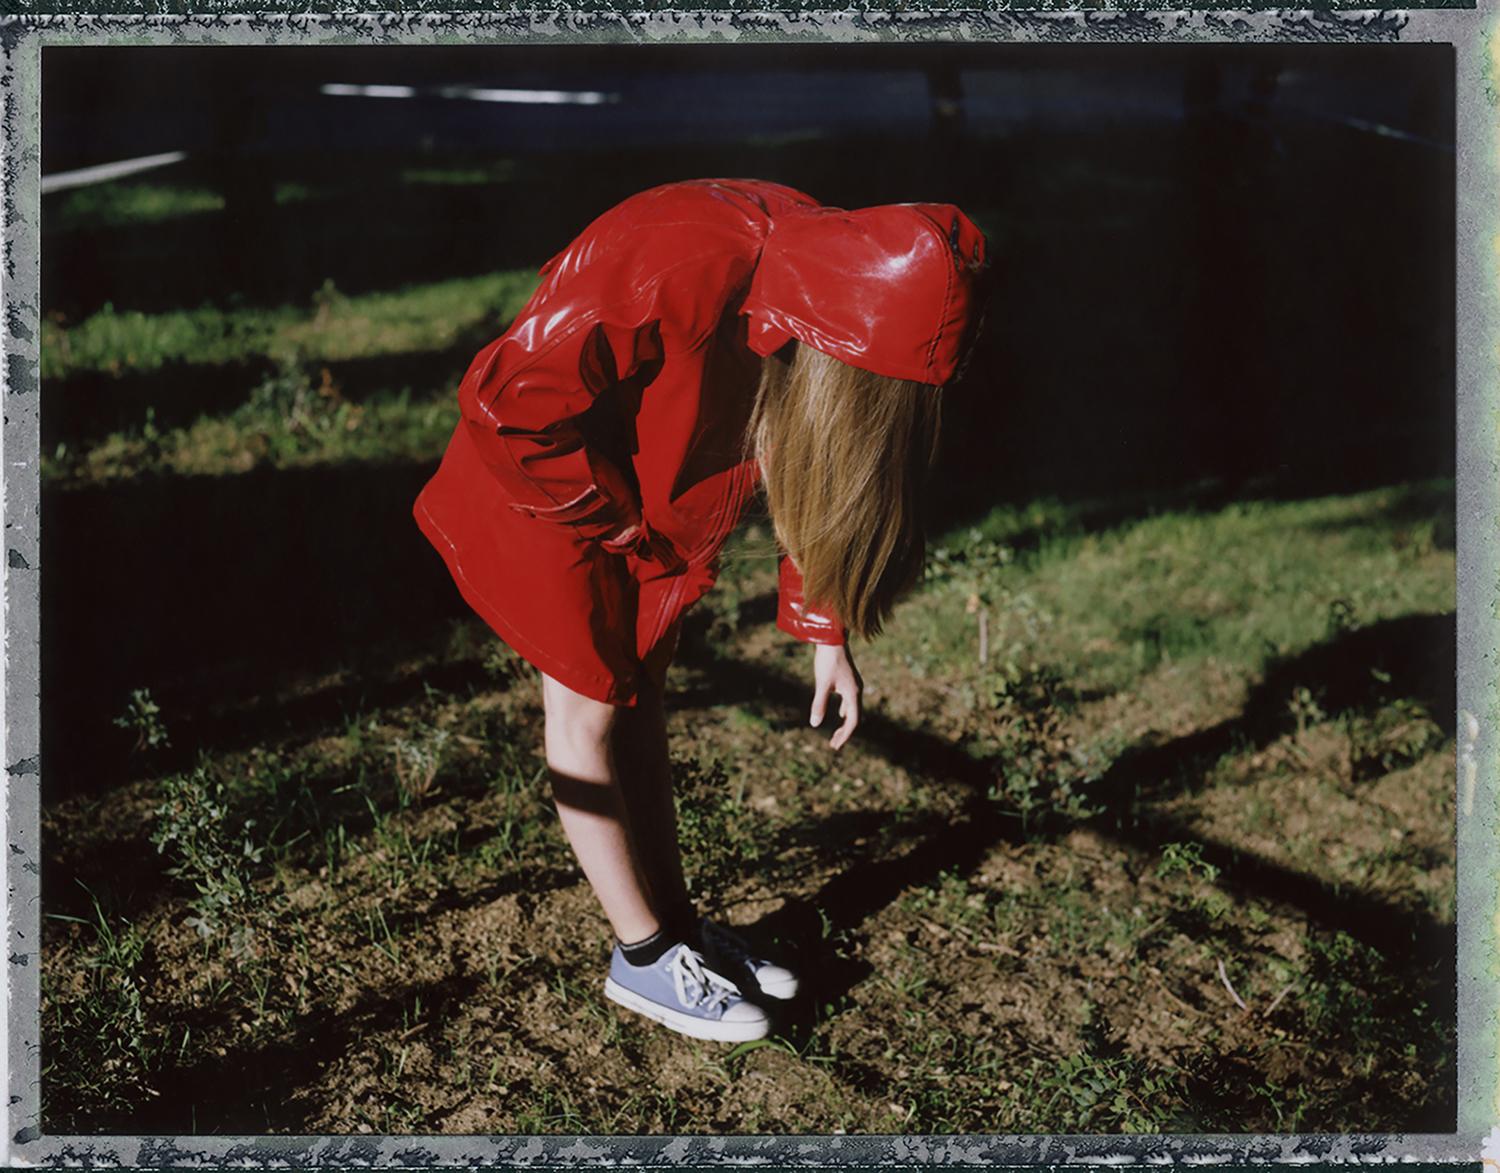 Cristina Fontsare Figurative Photograph - The hood is falling short  - Contemporary, Polaroid, Photograph, Youth